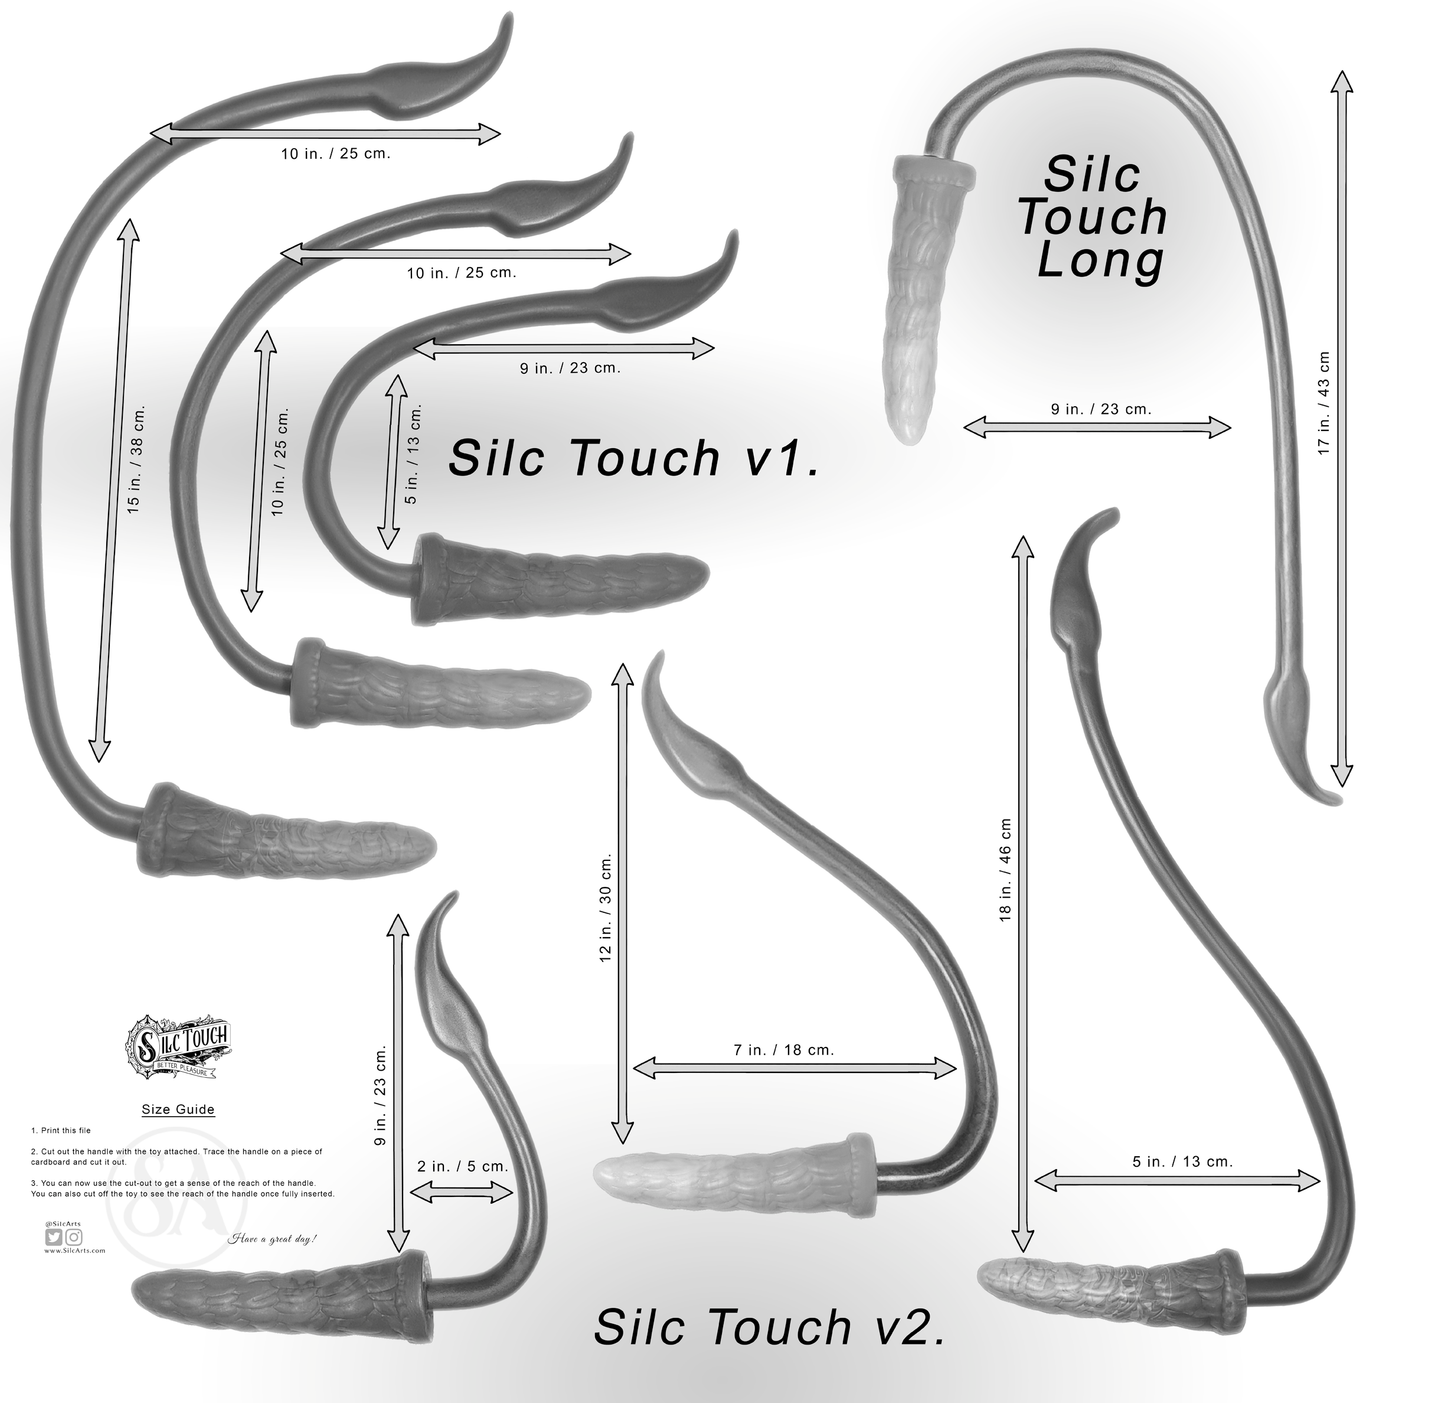 Silc Touch v2. - Ergonomic handle - VacLoc - Md